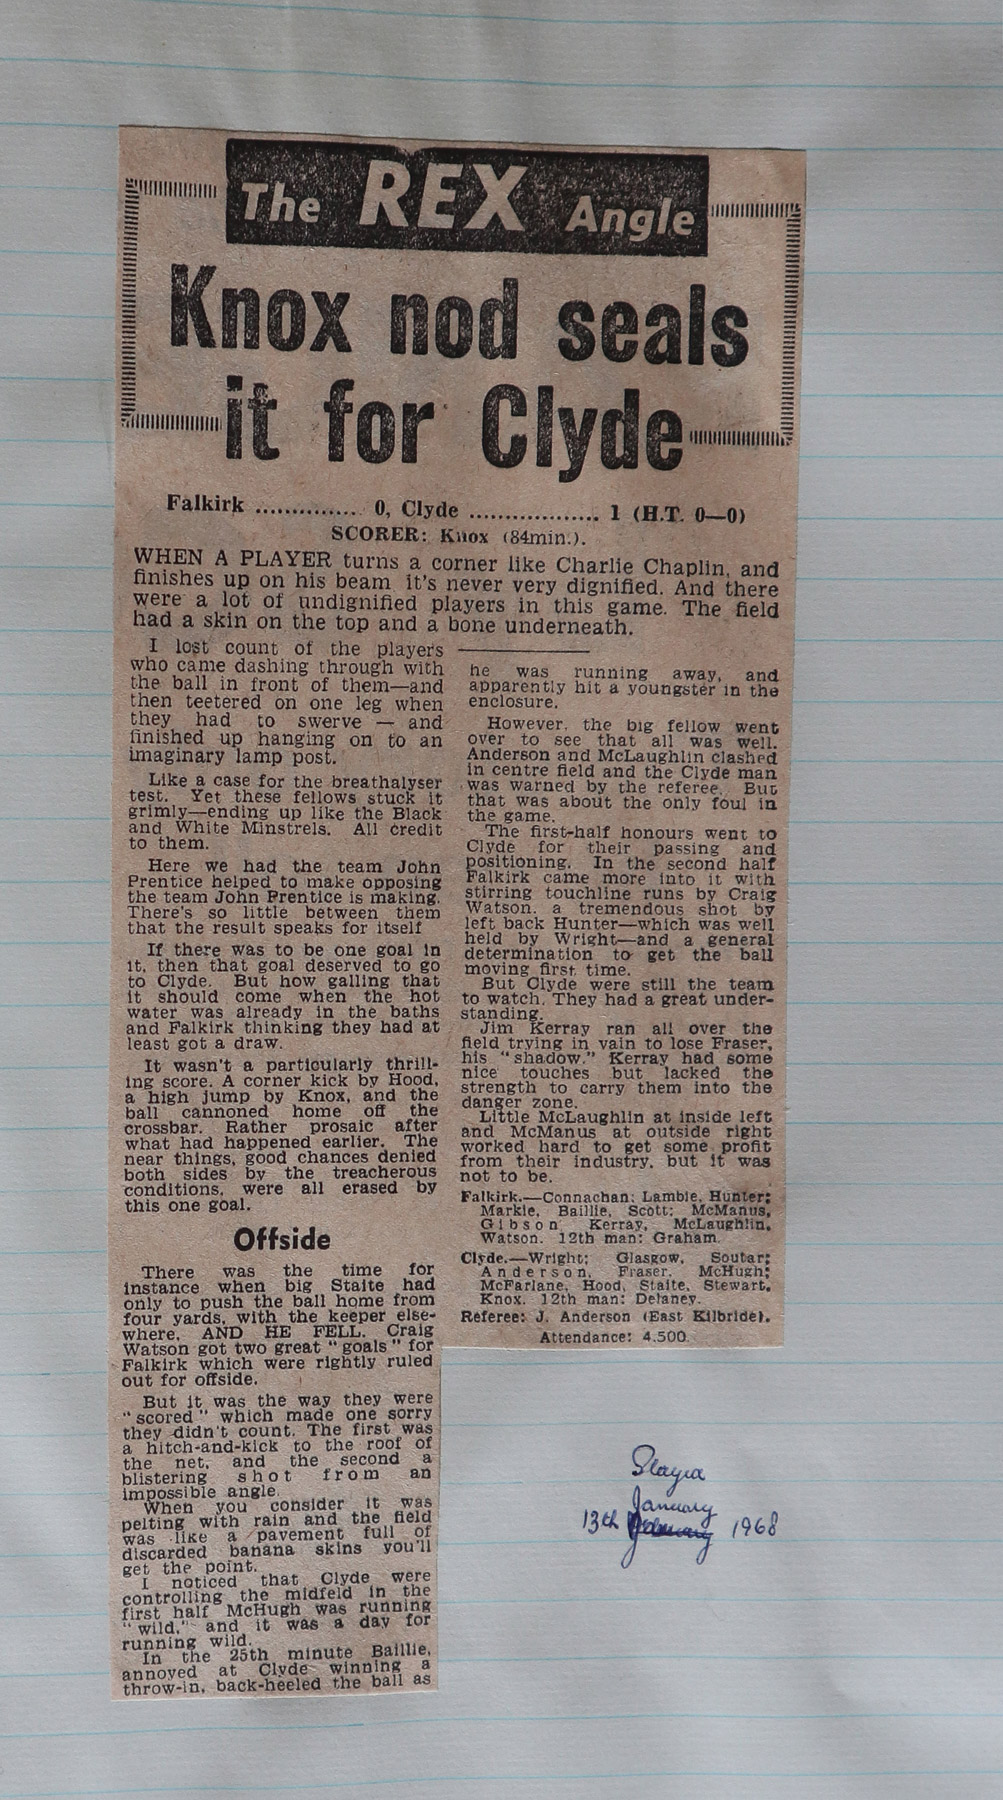 1968-01-13_Falkirk_0-1_Clyde_L1_1